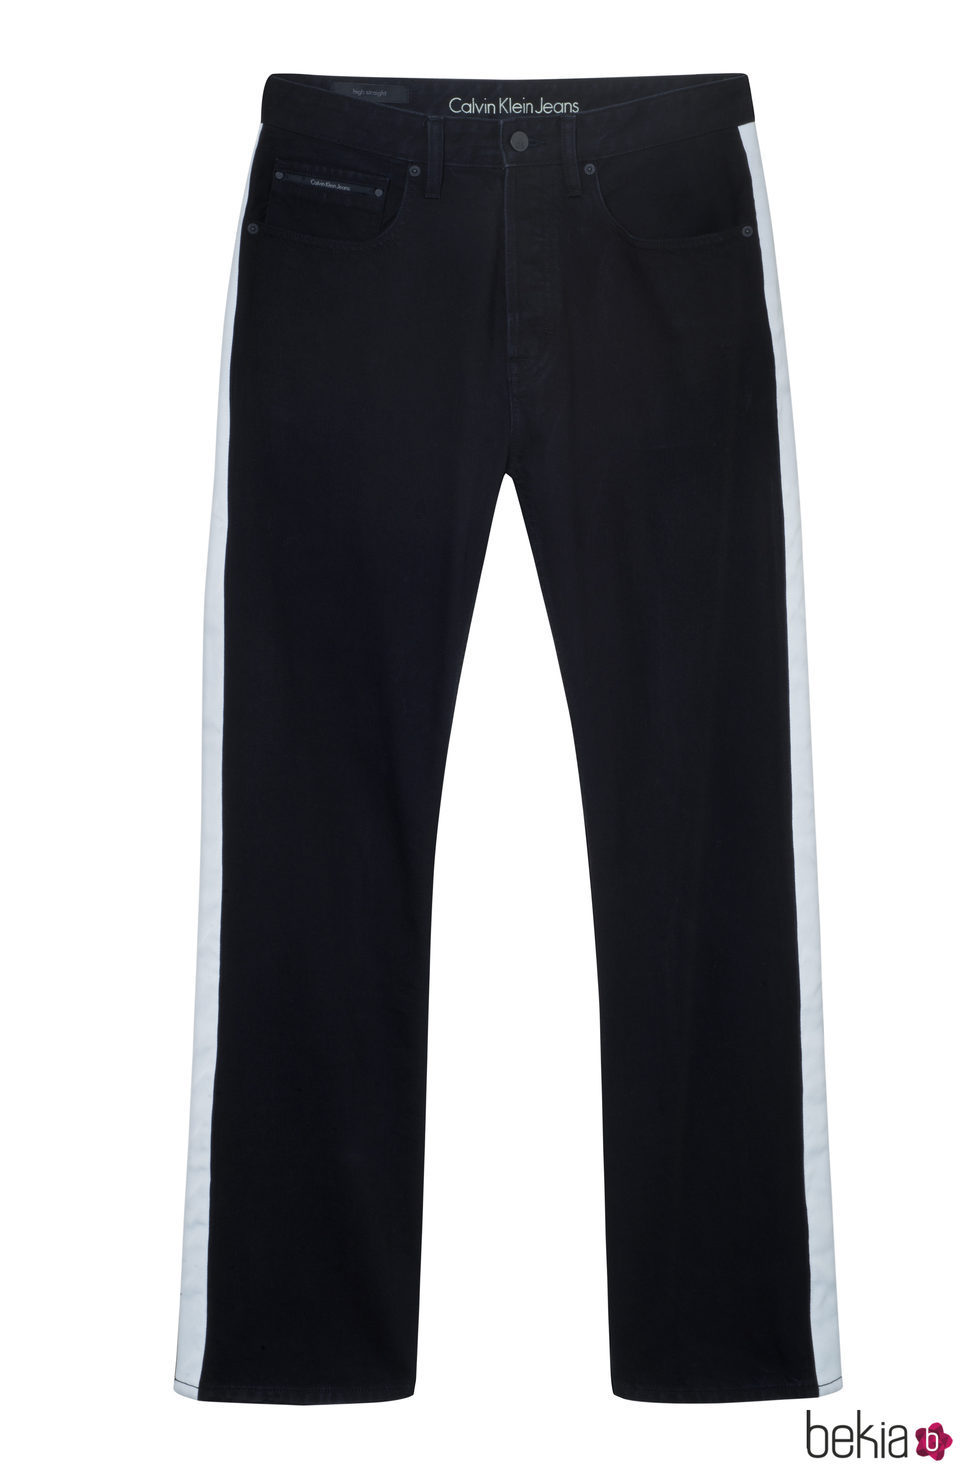 Pantalón negro masculino de Calvin Klein de la colección primavera jeans 2018